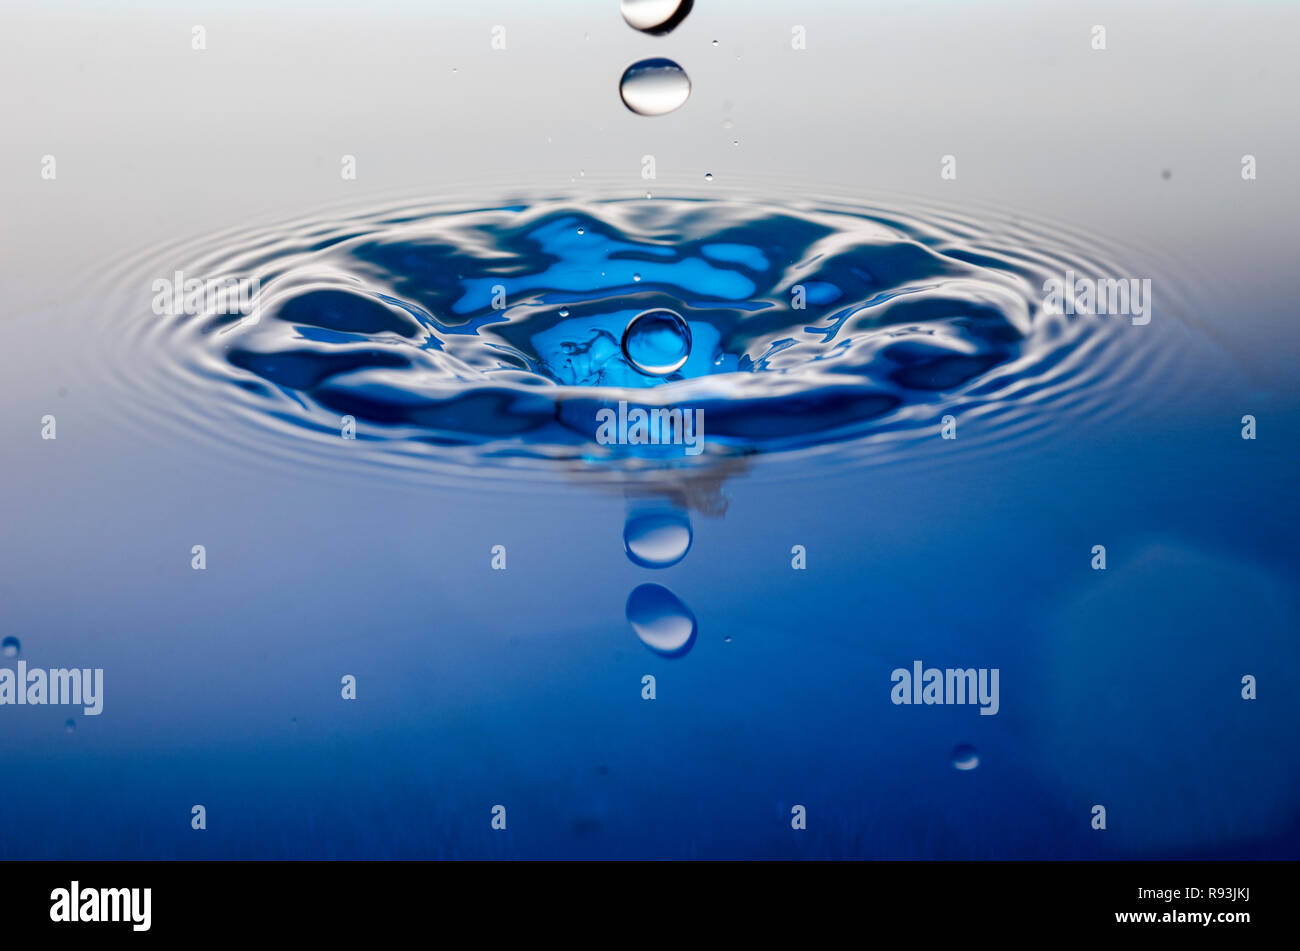 Blue water droplet making a splash Stock Photo